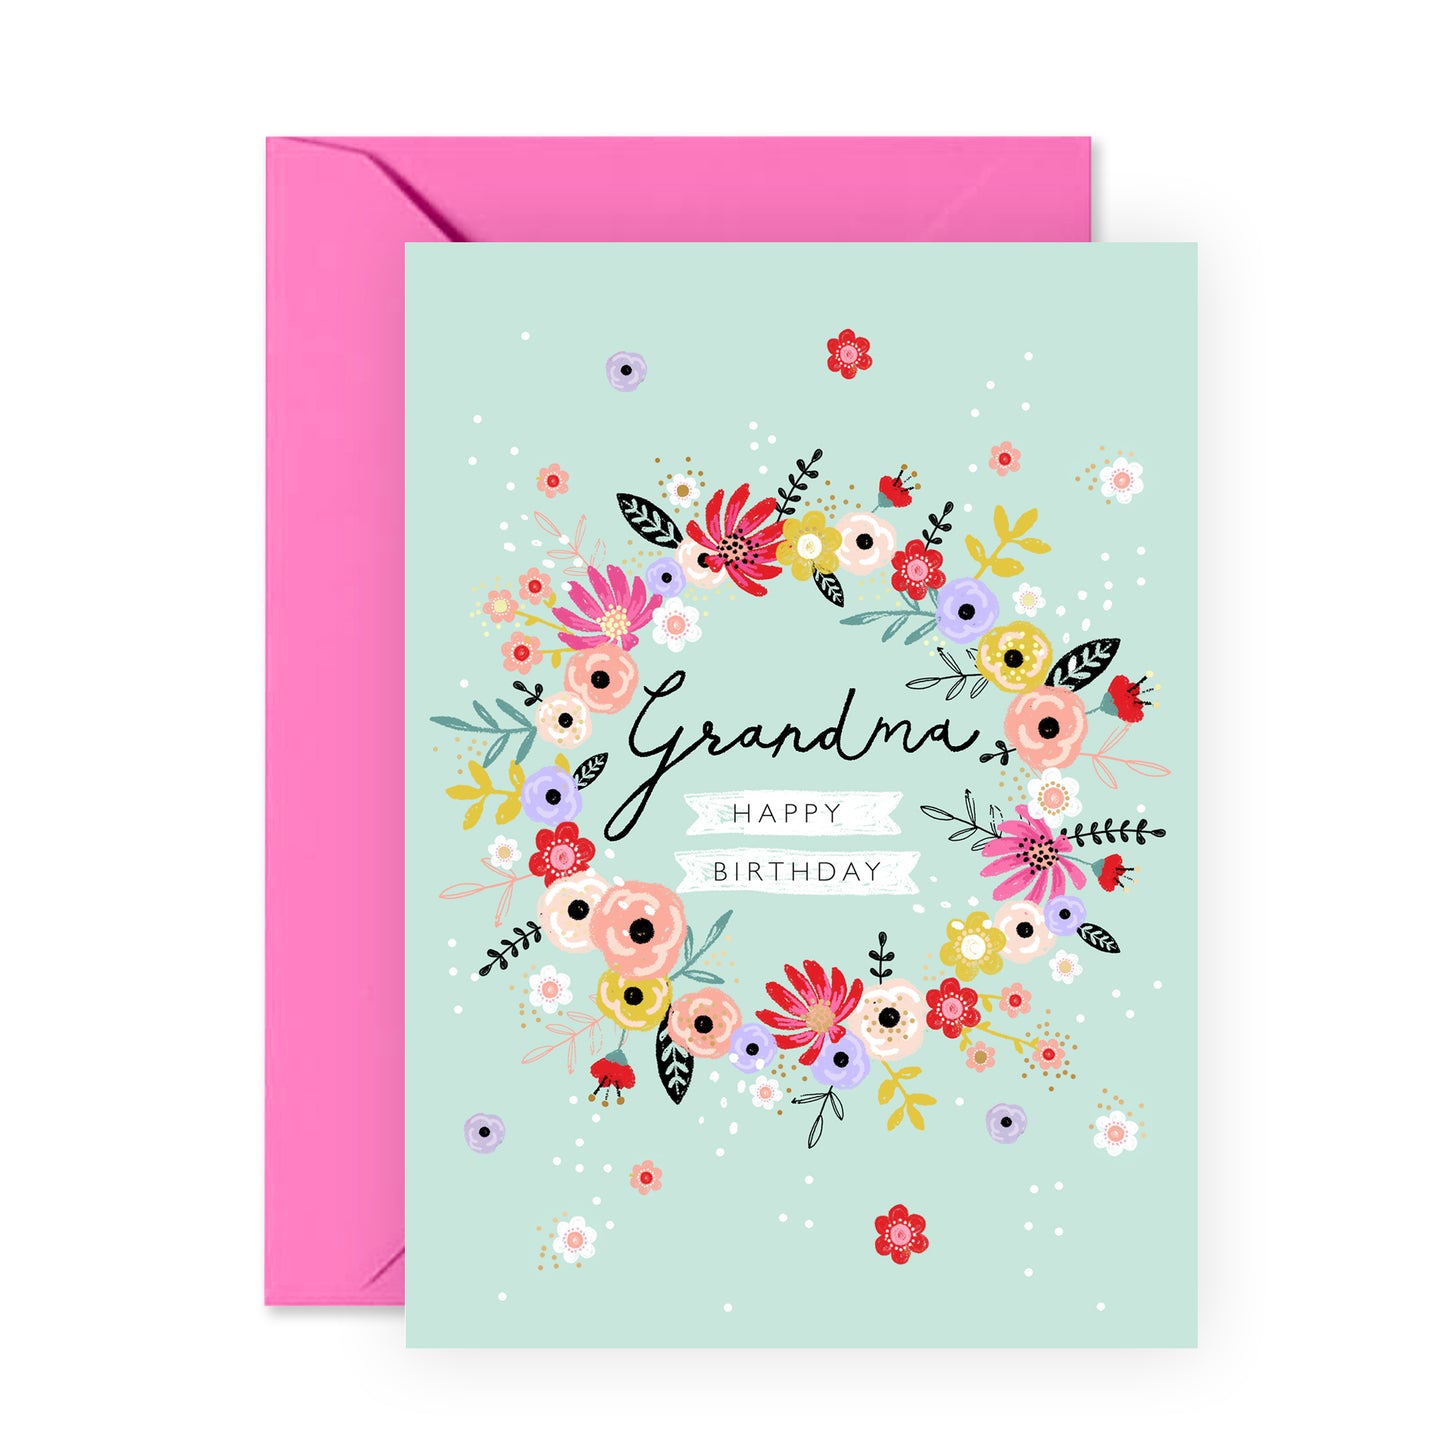 Sweet Birthday Card - Grandma, Happy Birthday - For Grandmother Women Her